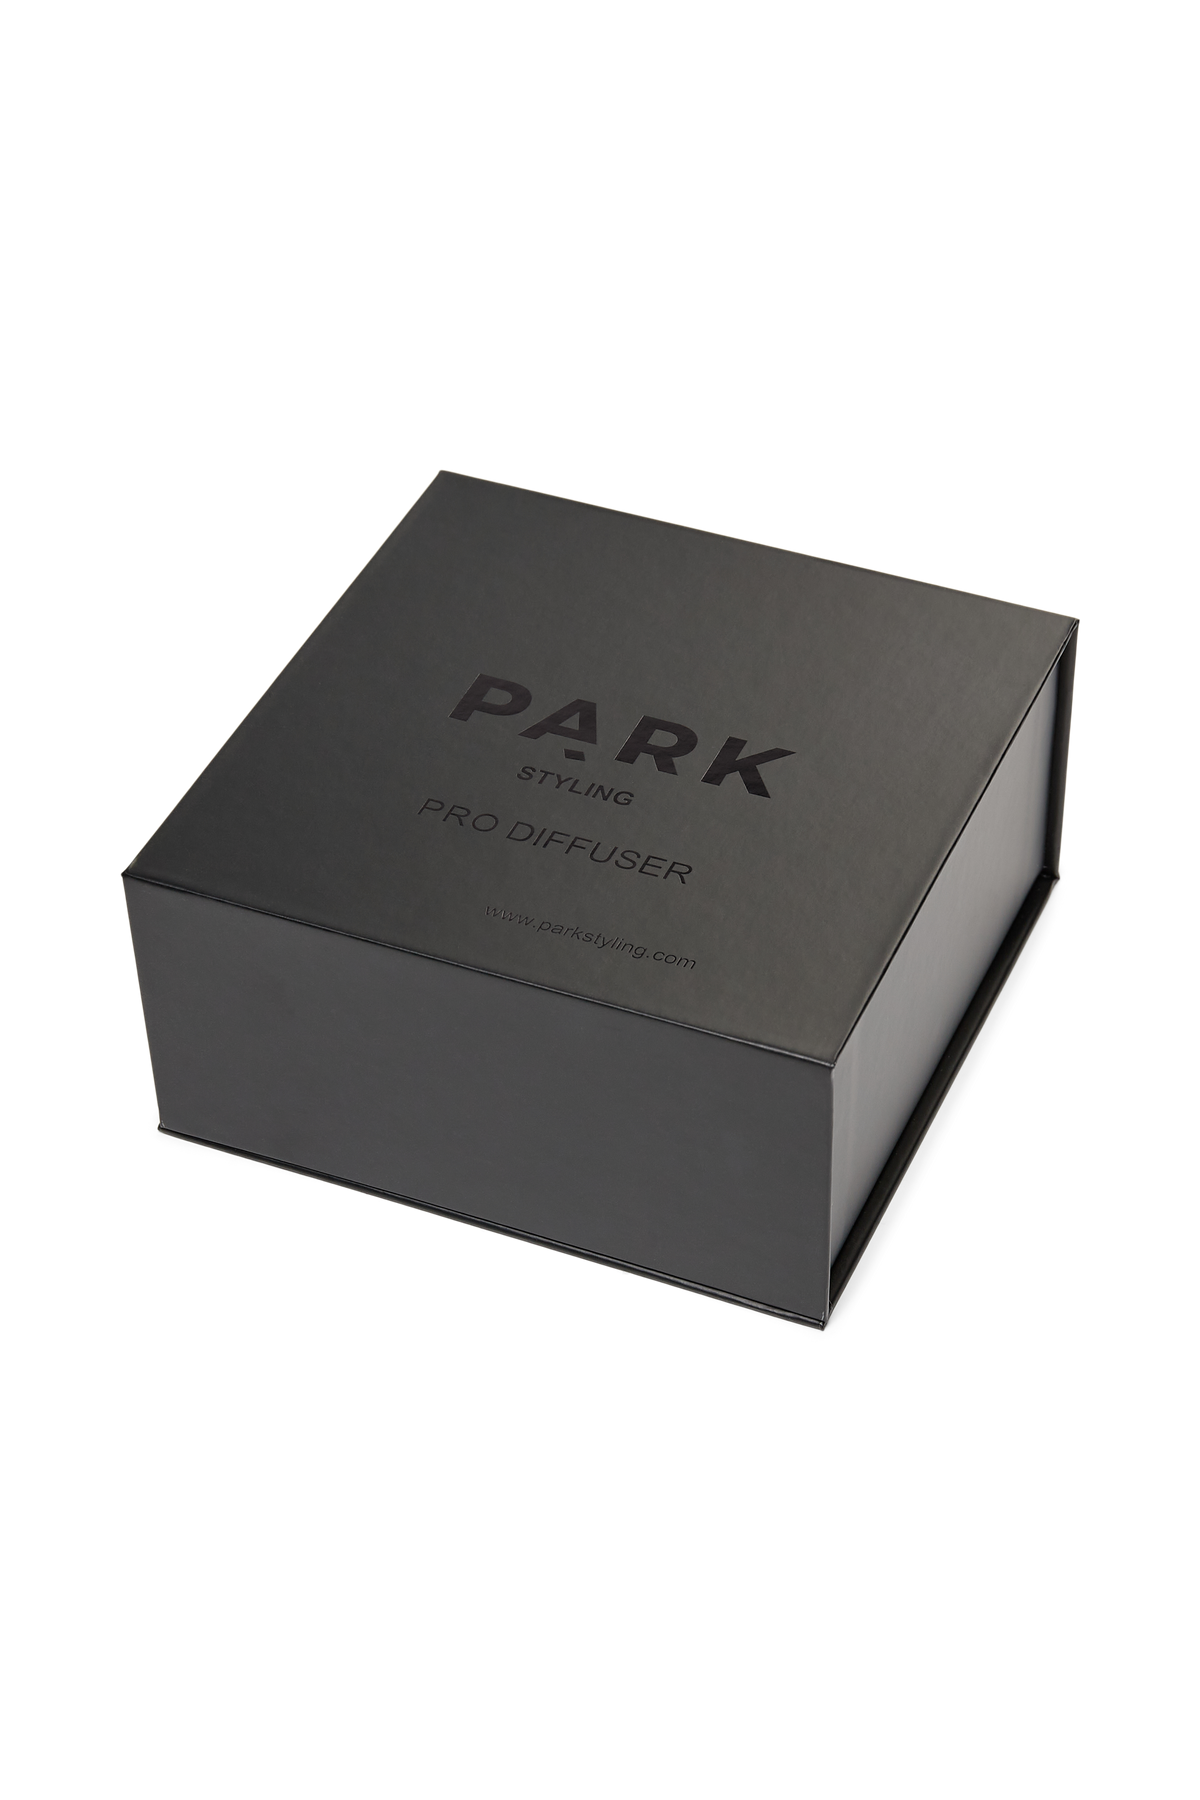 PARK Air Pro diffuser